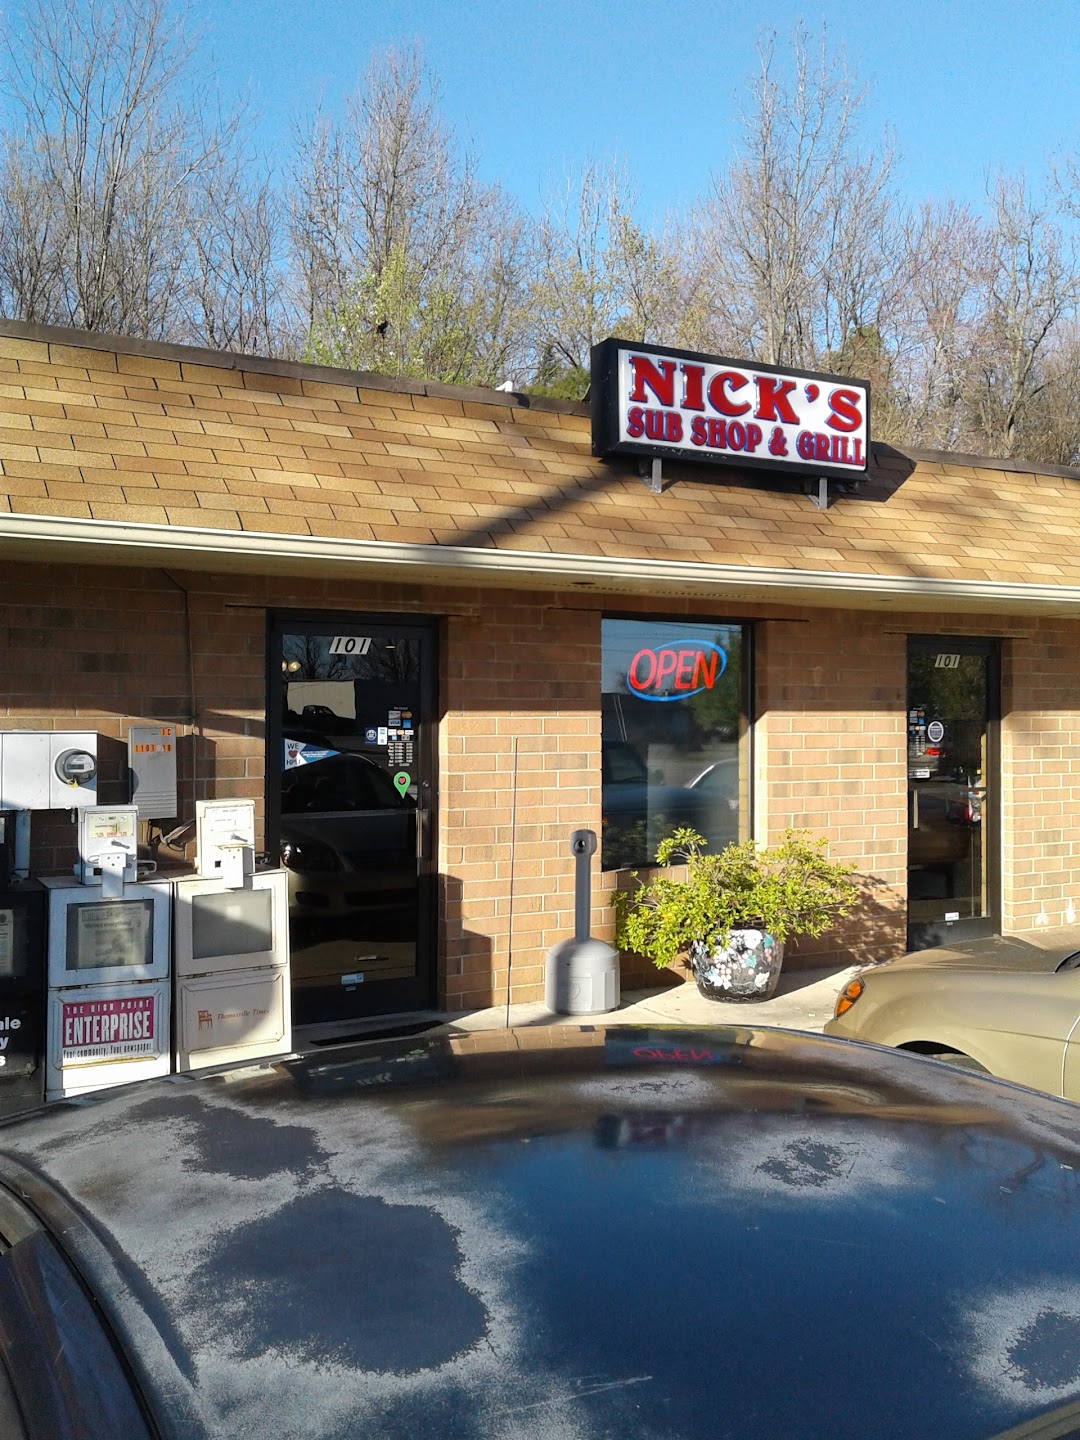 Nicks Sub Shop & Grill